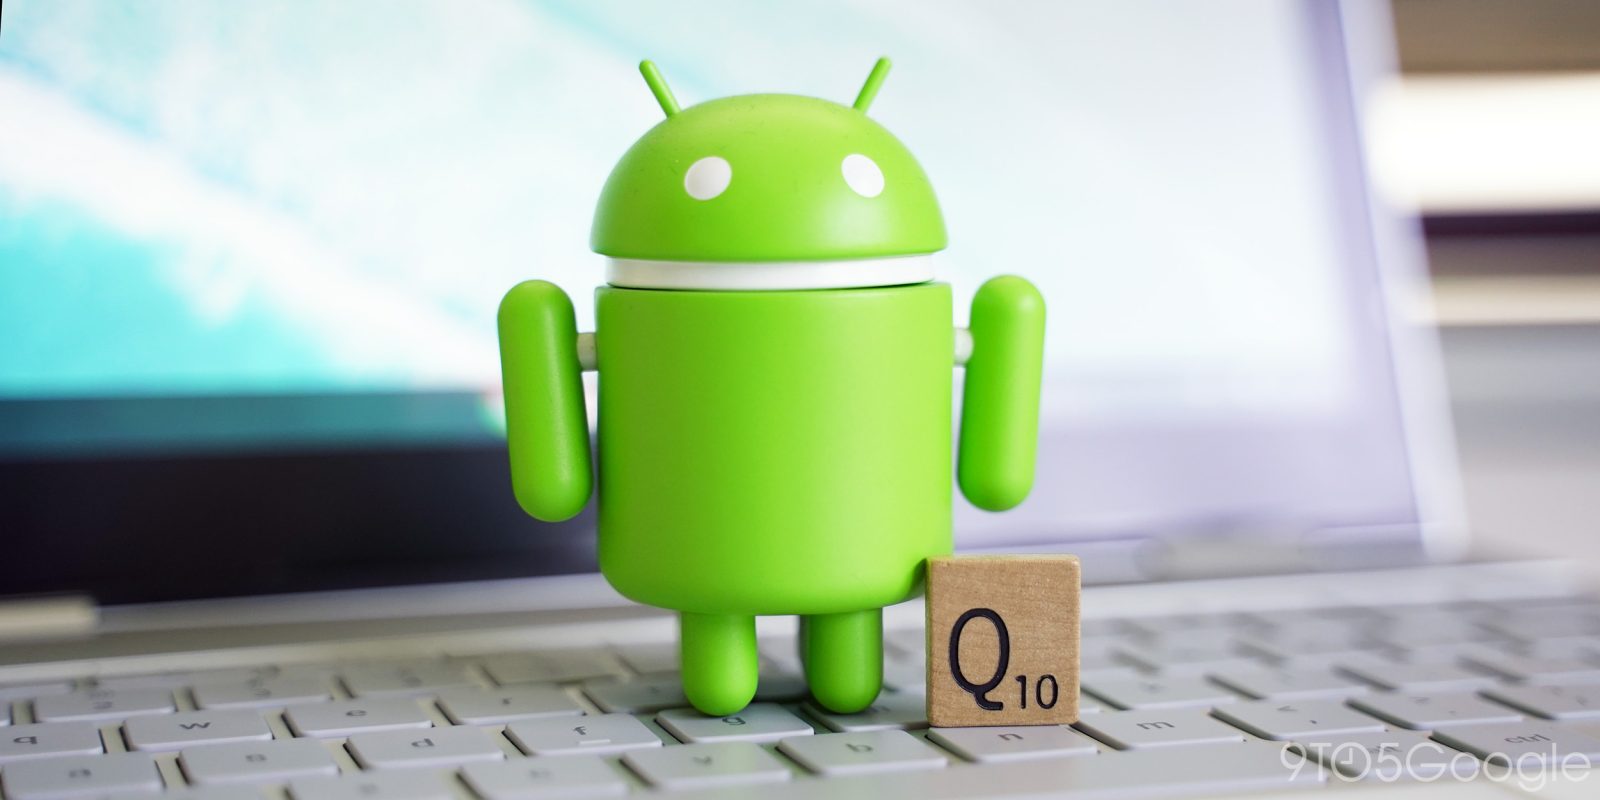 Android Q AMA Tidbits